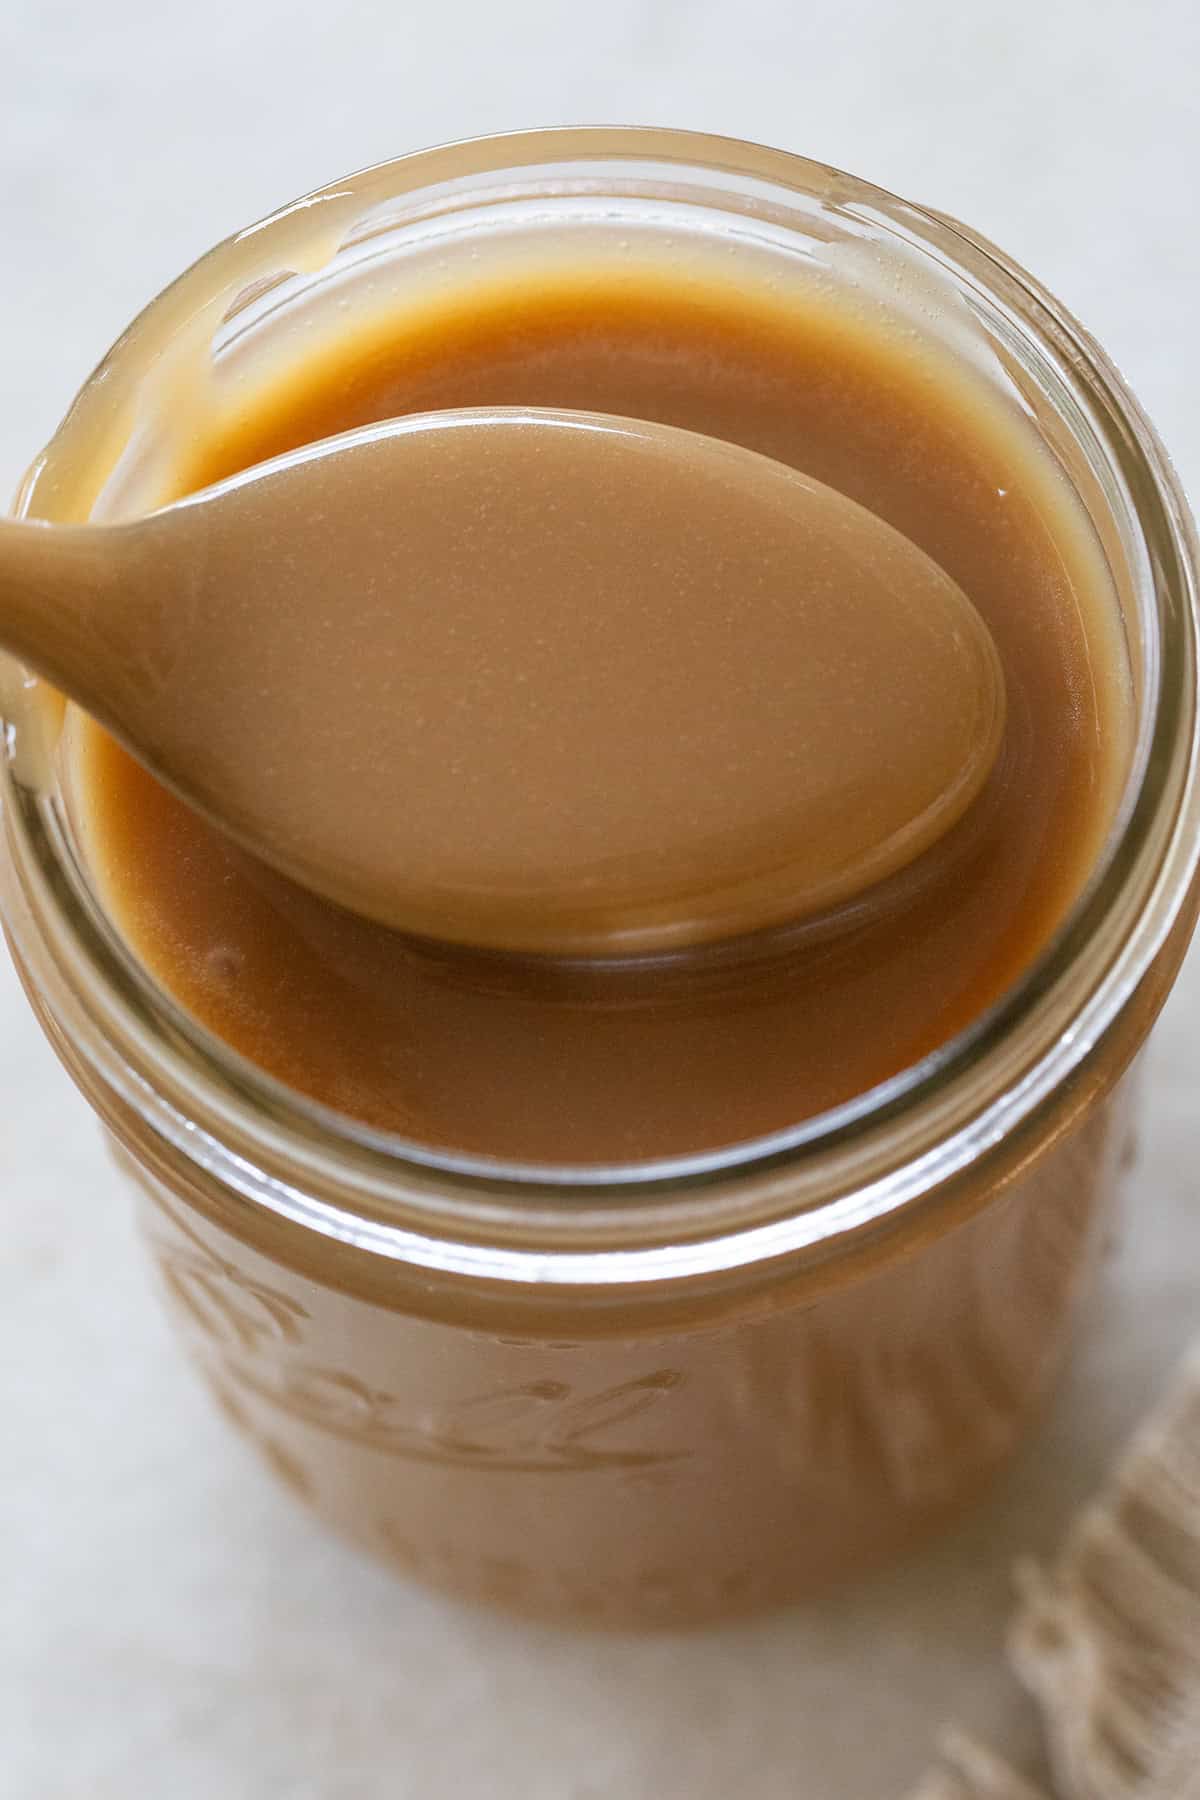 Creamy homemade caramel sauce in a glass jar.